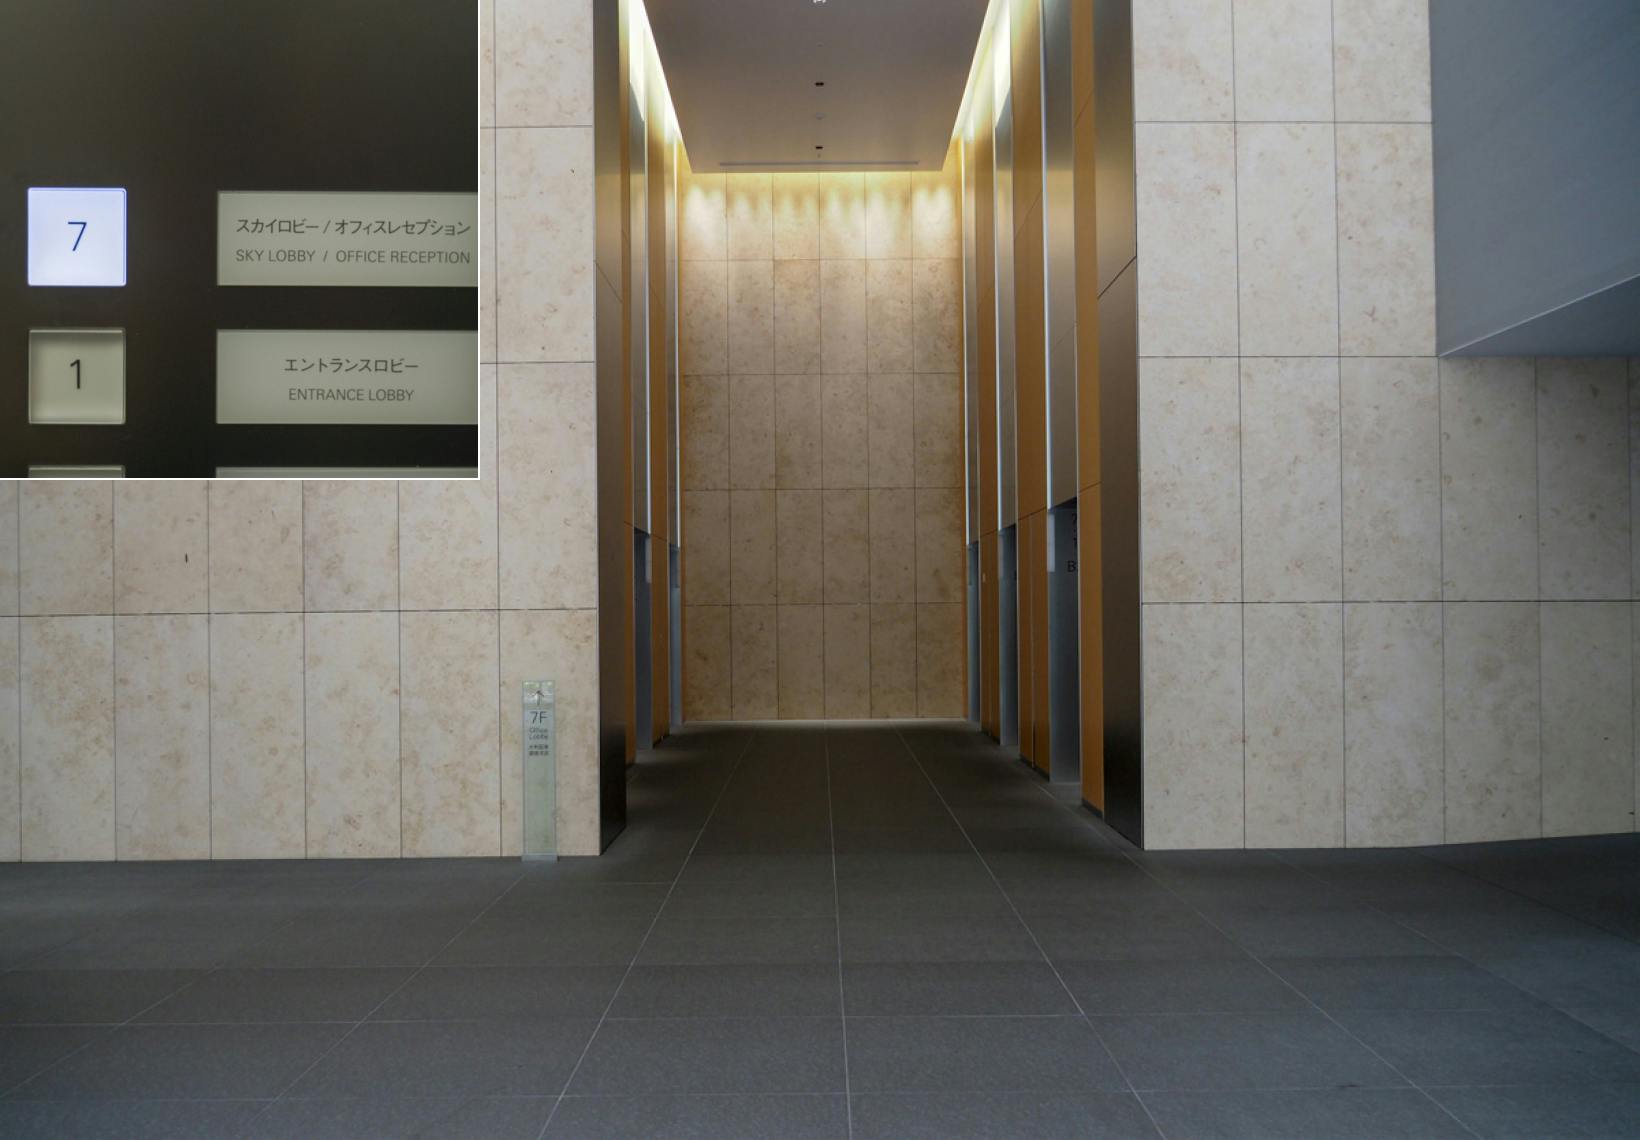 Image of the elevator hall